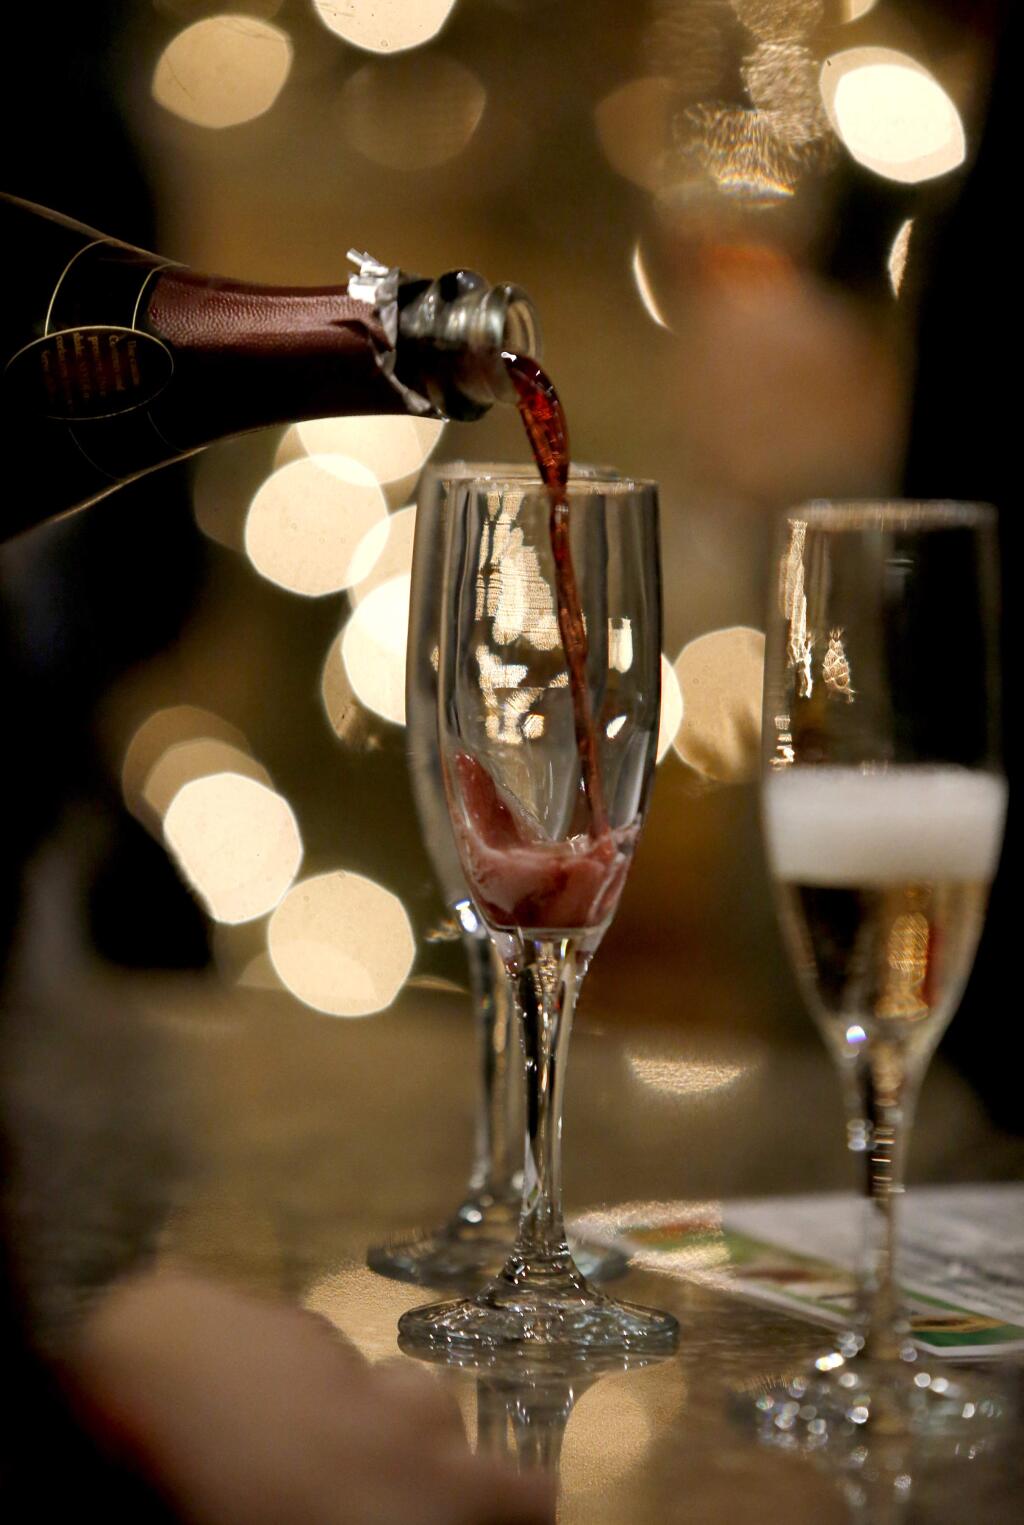 A glass of Korbel Rouge champagne is poured at Korbel Champagne Cellars in Guerneville, on Thursday, December 29, 2016. (BETH SCHLANKER/ The Press Democrat)